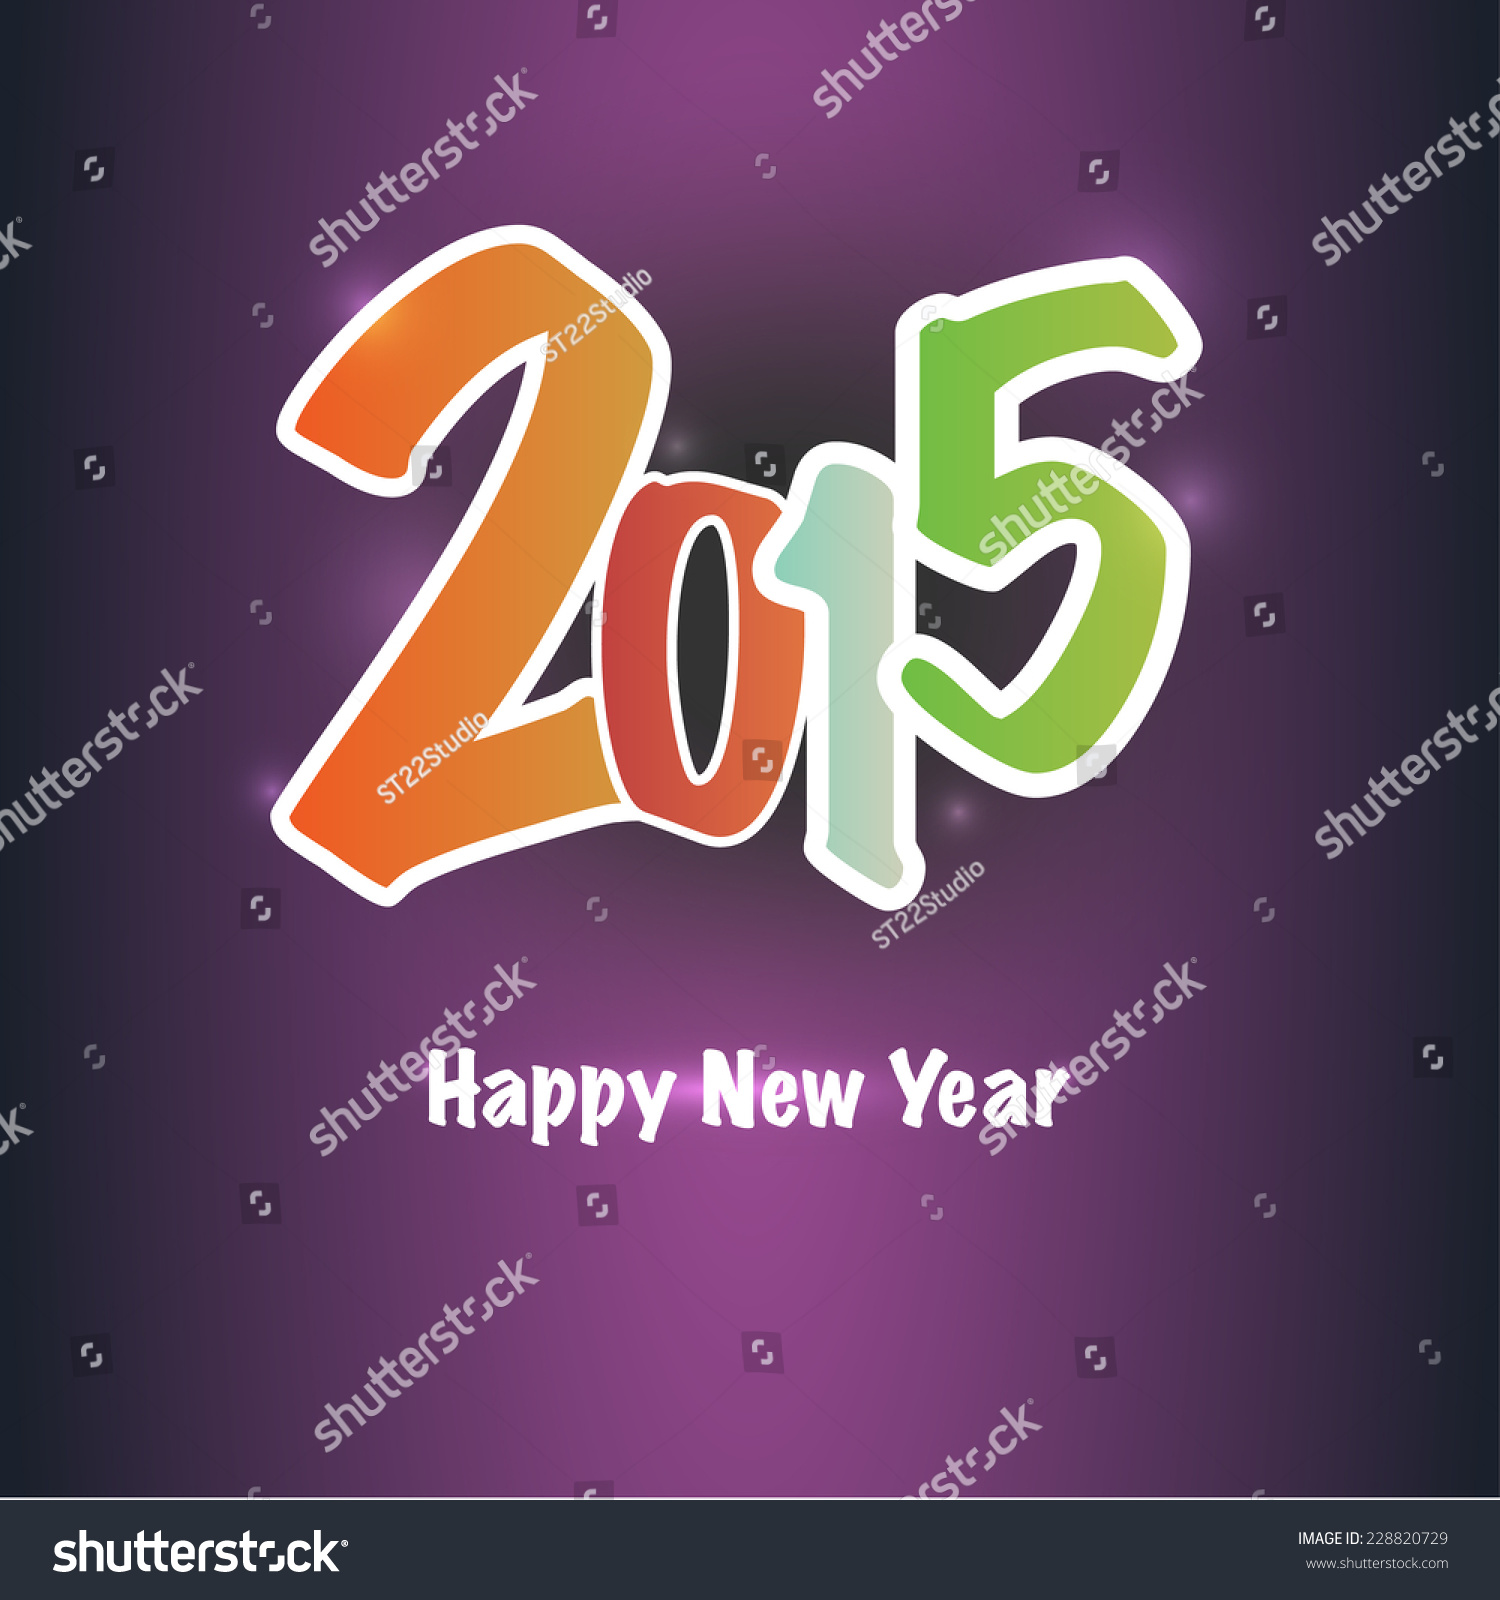 Vector Of Happy New Year 2015 - 228820729 : Shutterstock